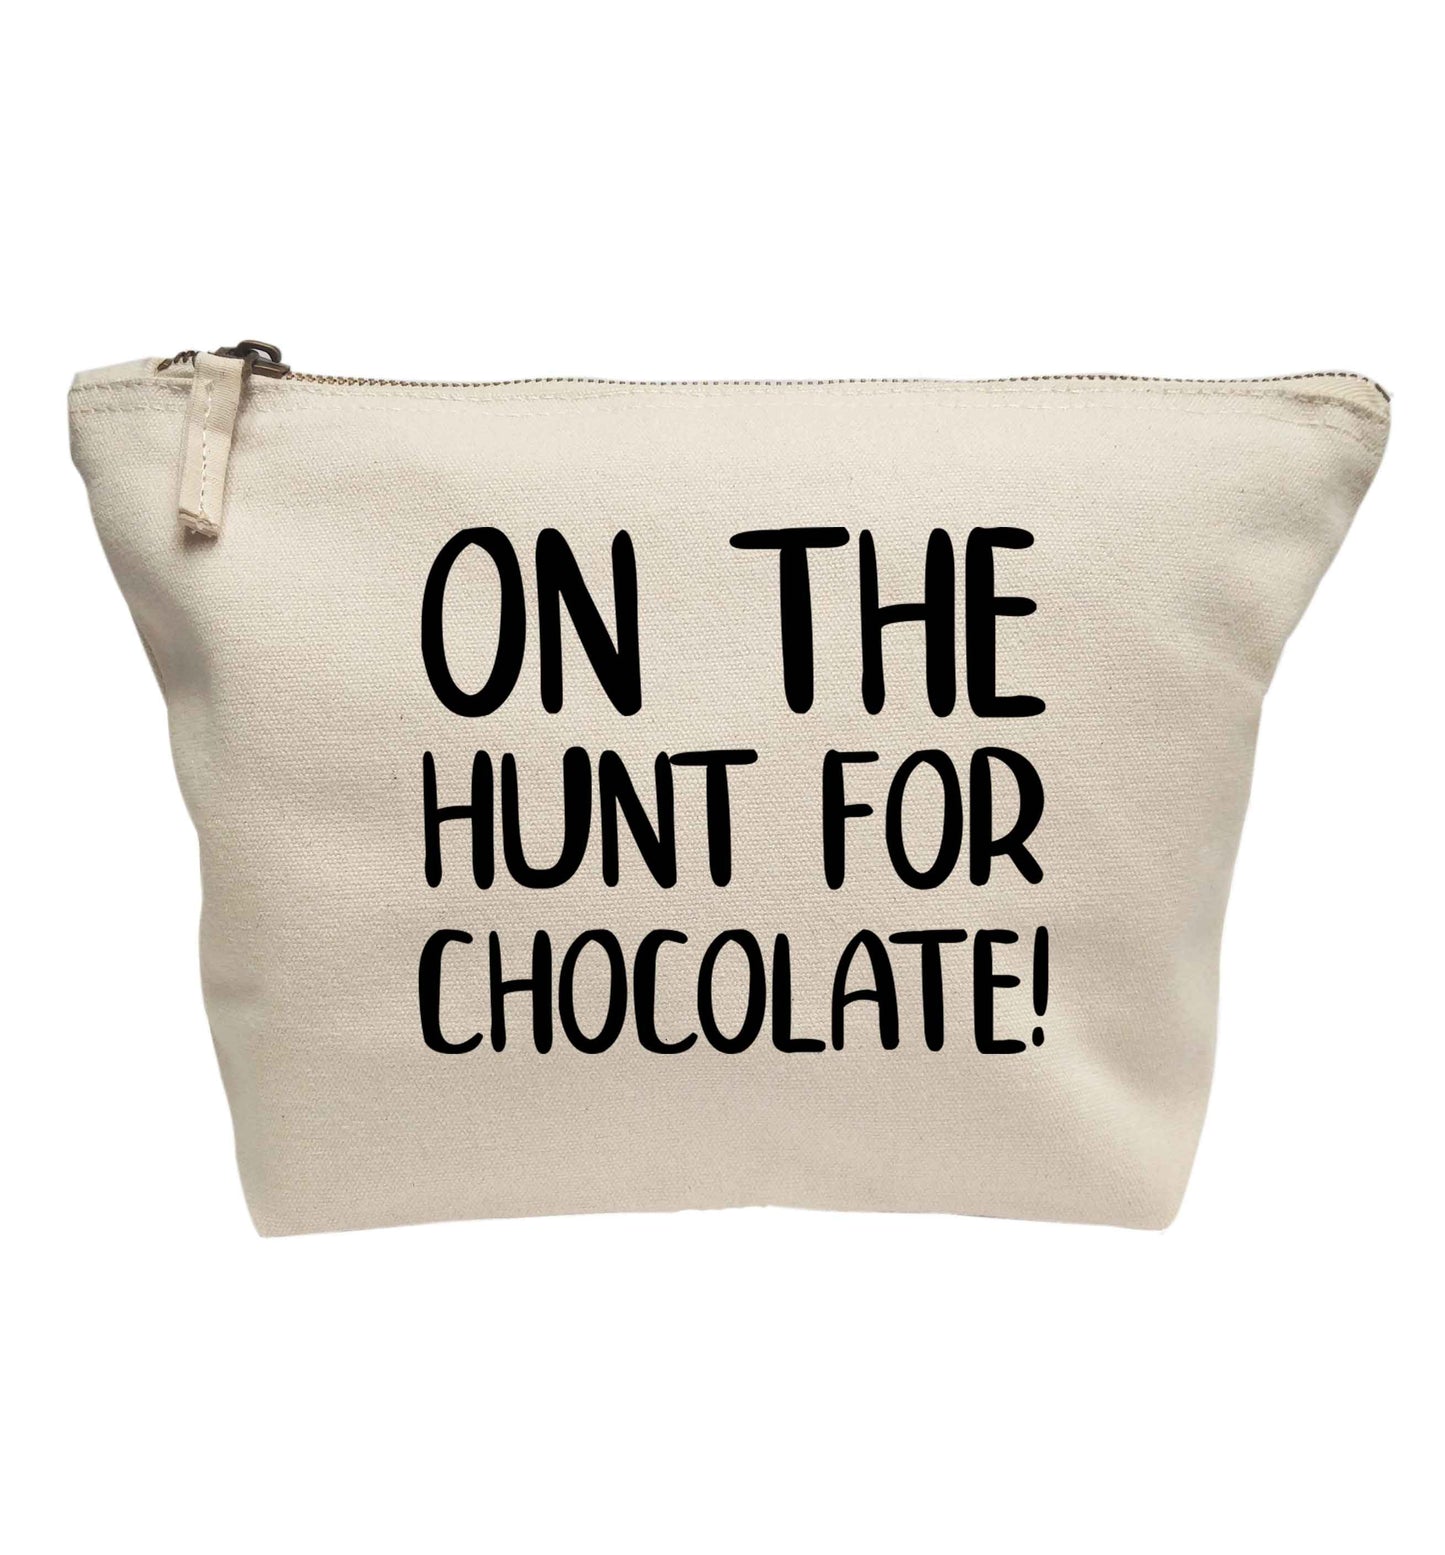 On the hunt for chocolate! | Makeup / wash bag